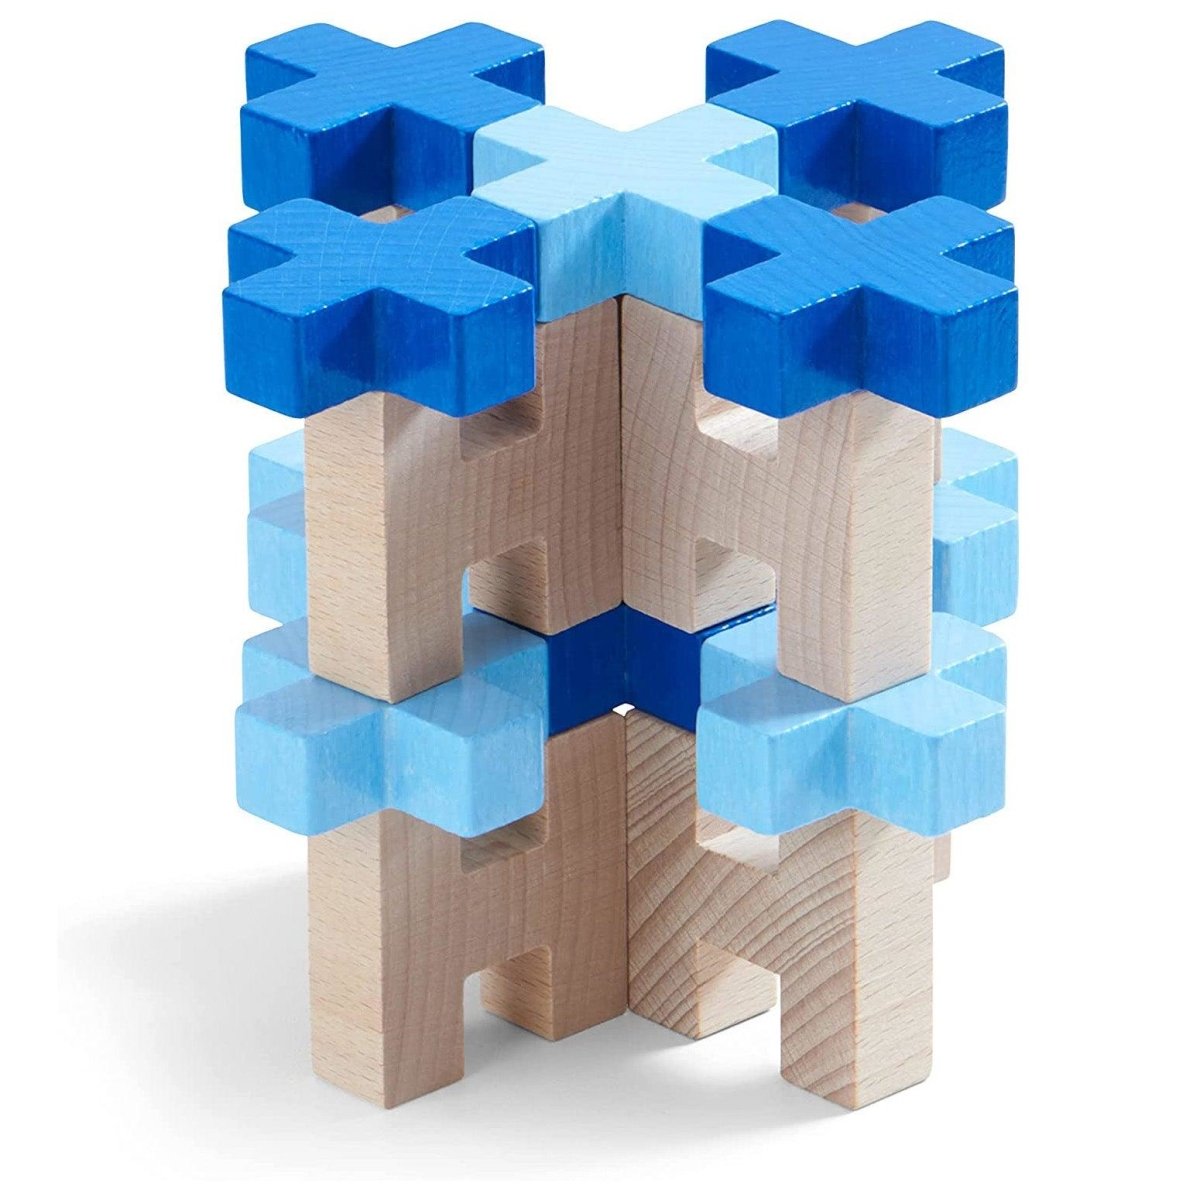 3D Aerius Creative Wooden Block Puzzle Game For Kids - Zidar Kid